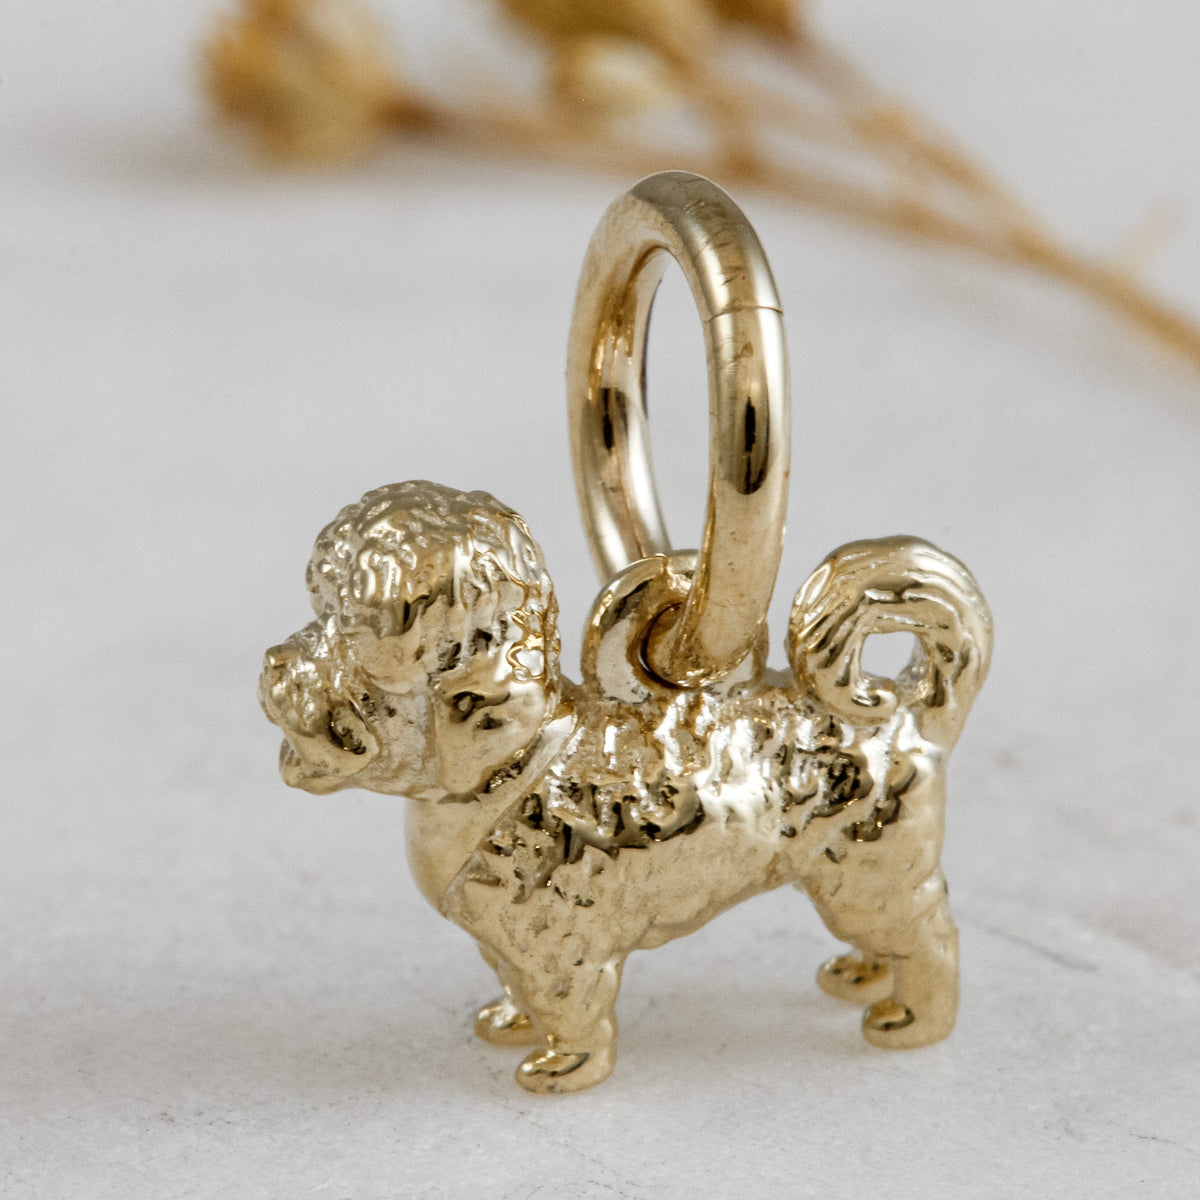 maltipoo solid gold dog charm for a necklace or bracelet